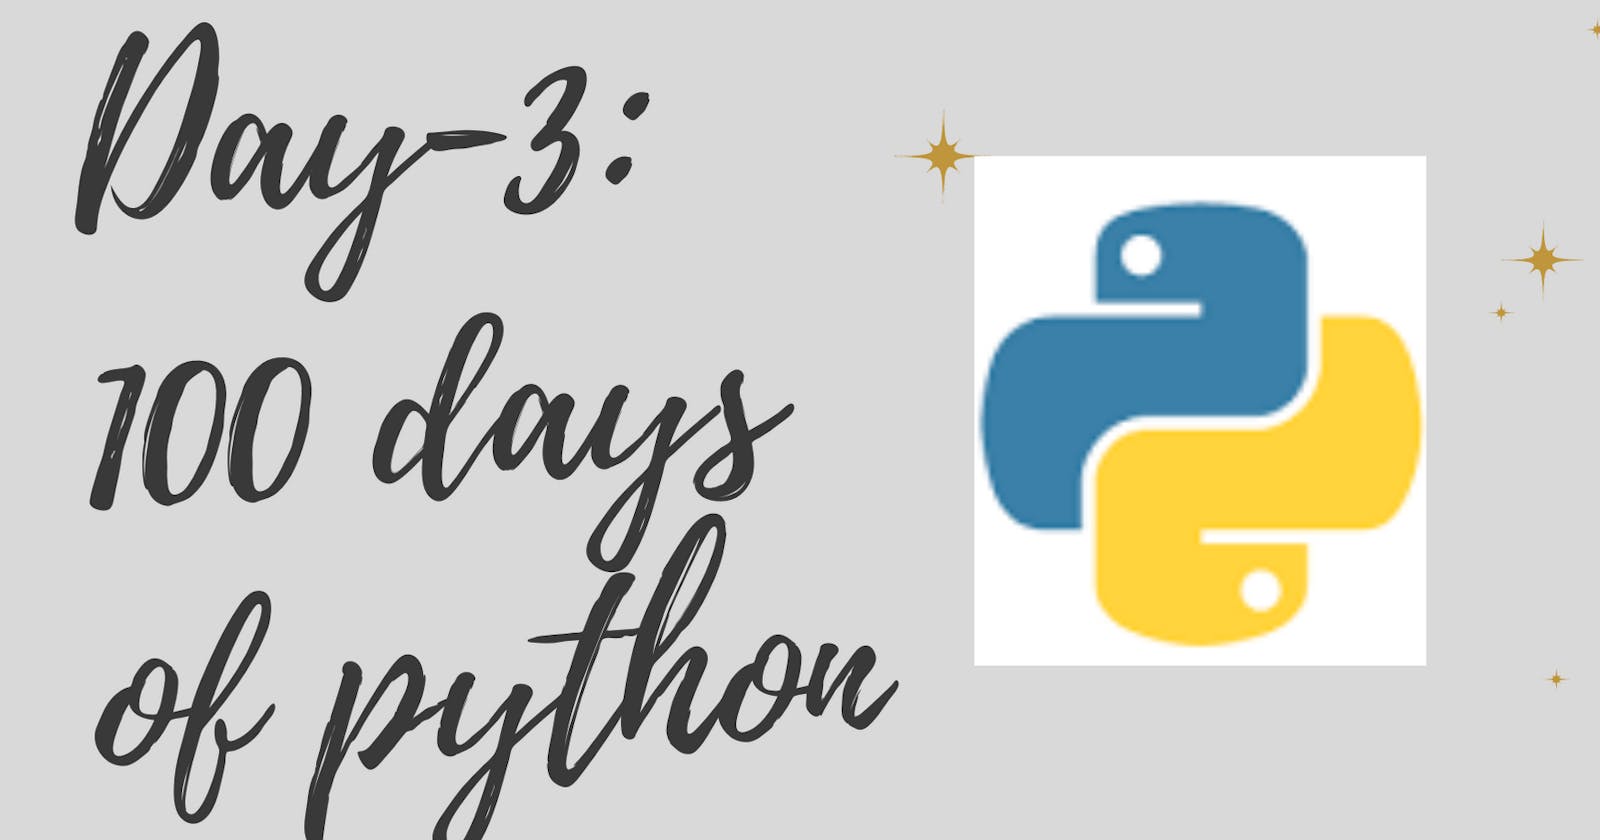 Day-3, 100 days of Python